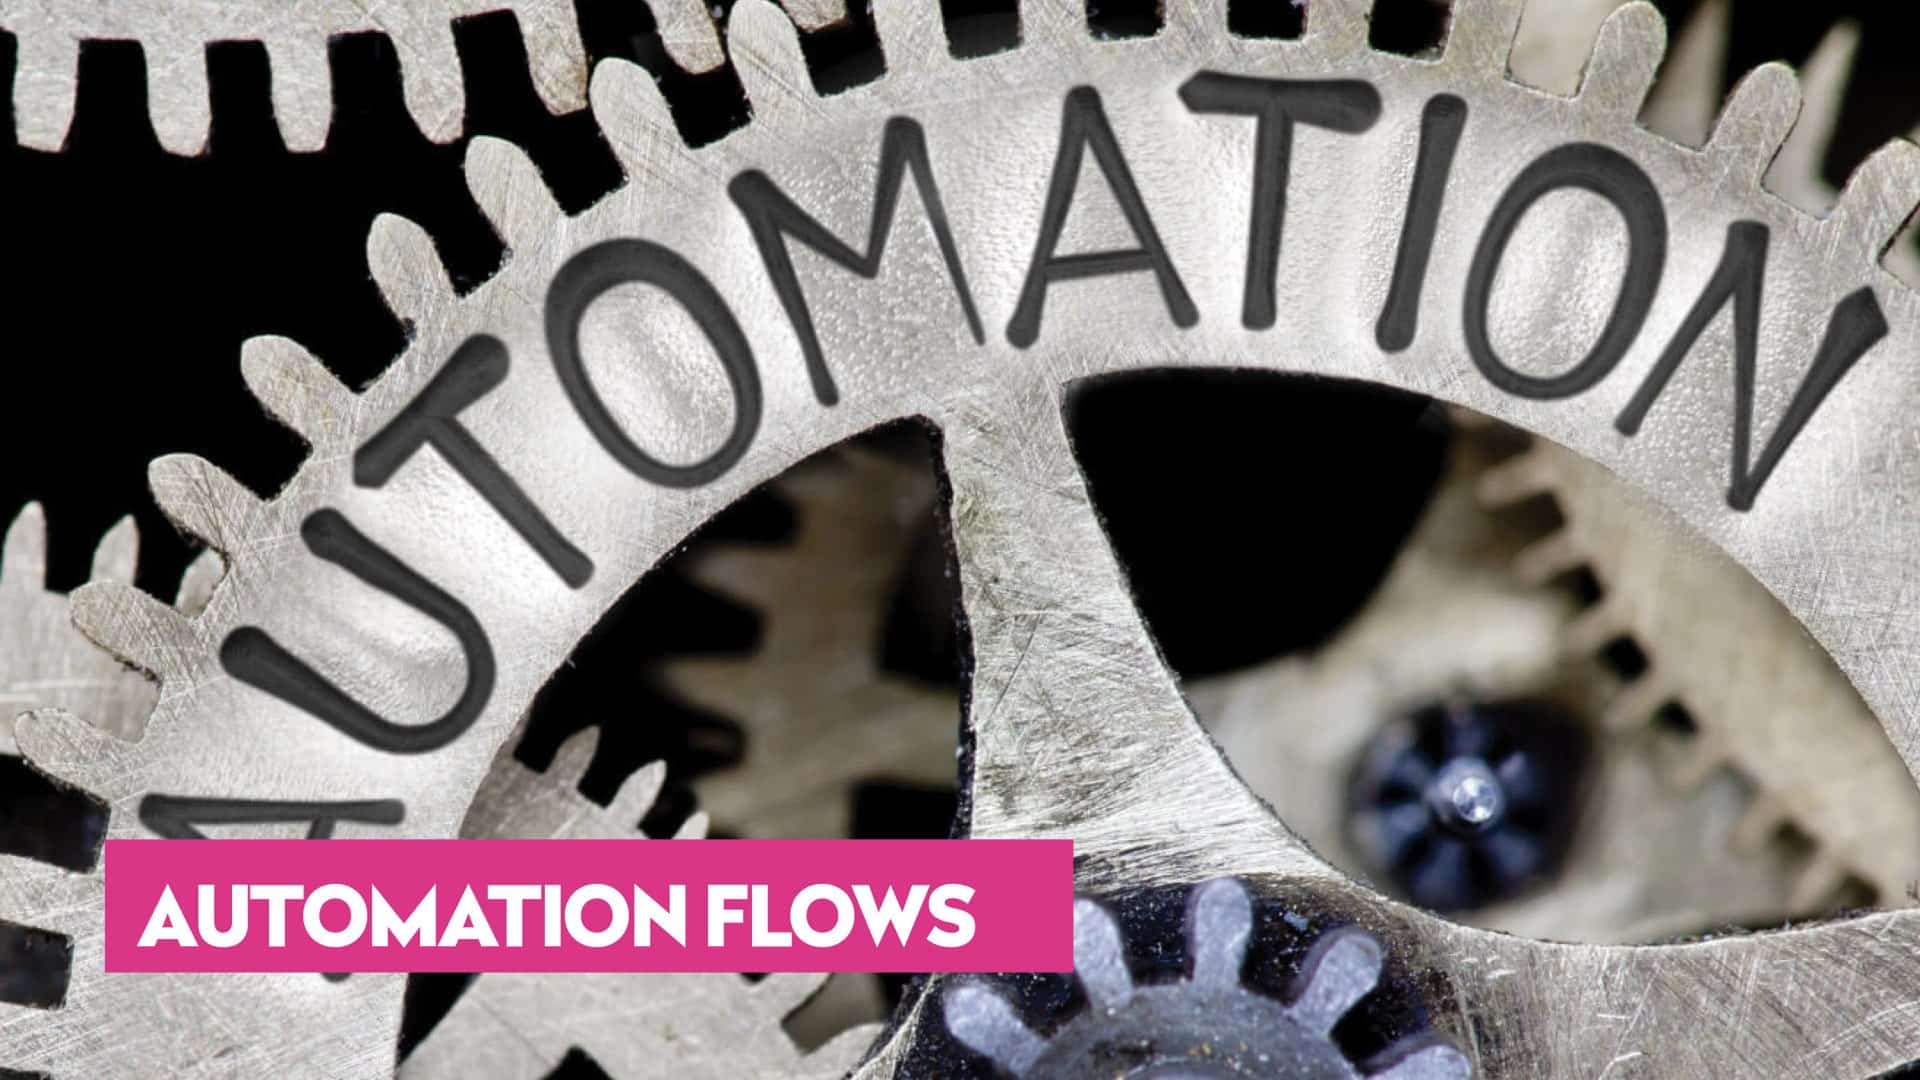 Automation flows (deel 3 van 3)